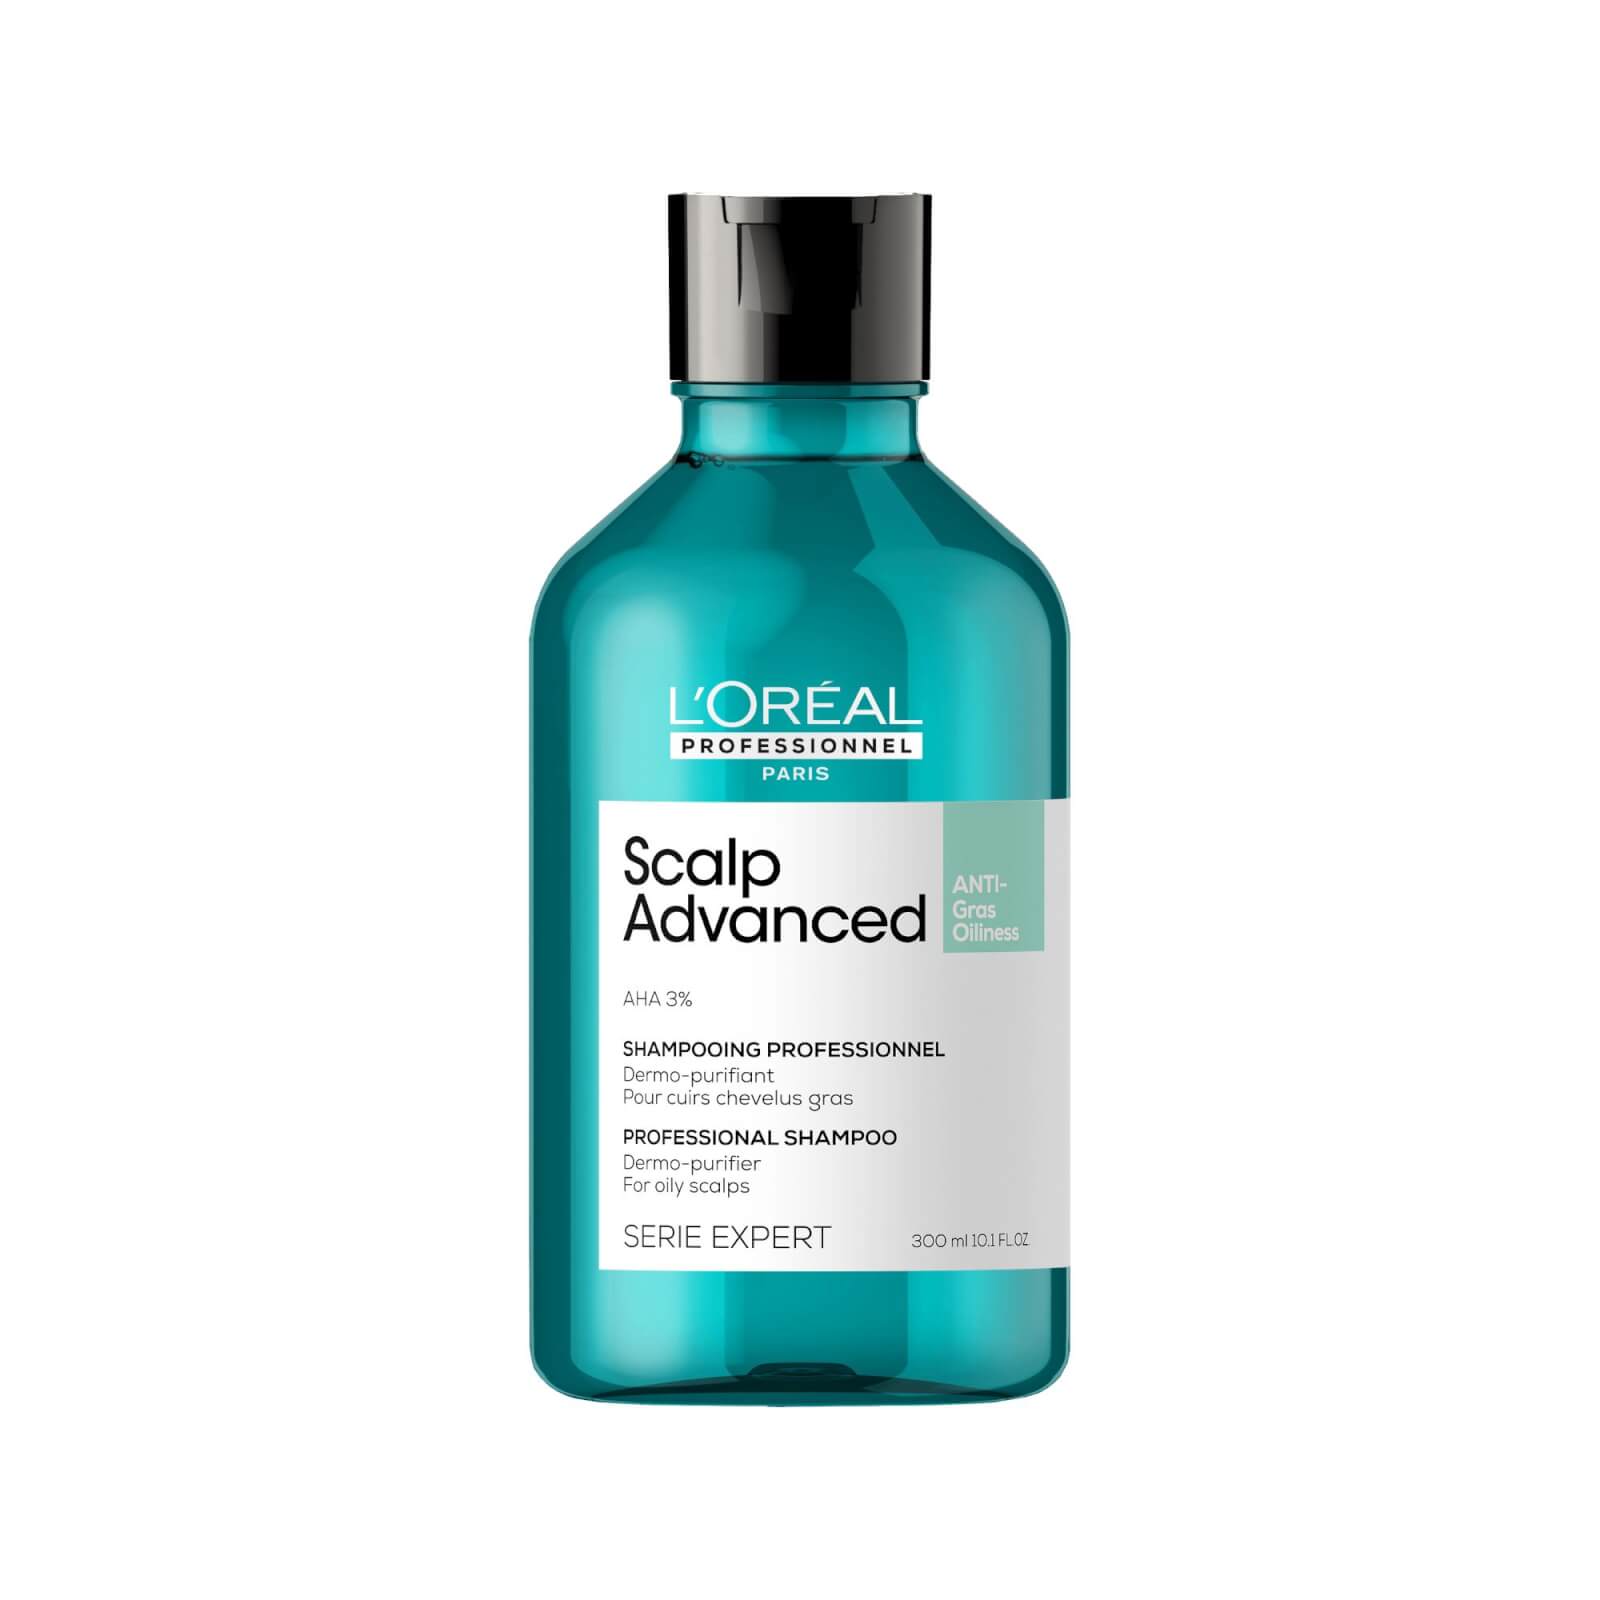 L'oreal Professionnel Serié Expert Scalp Advanced Anti-oiliness Dermo-purifier Shampoo 300ml